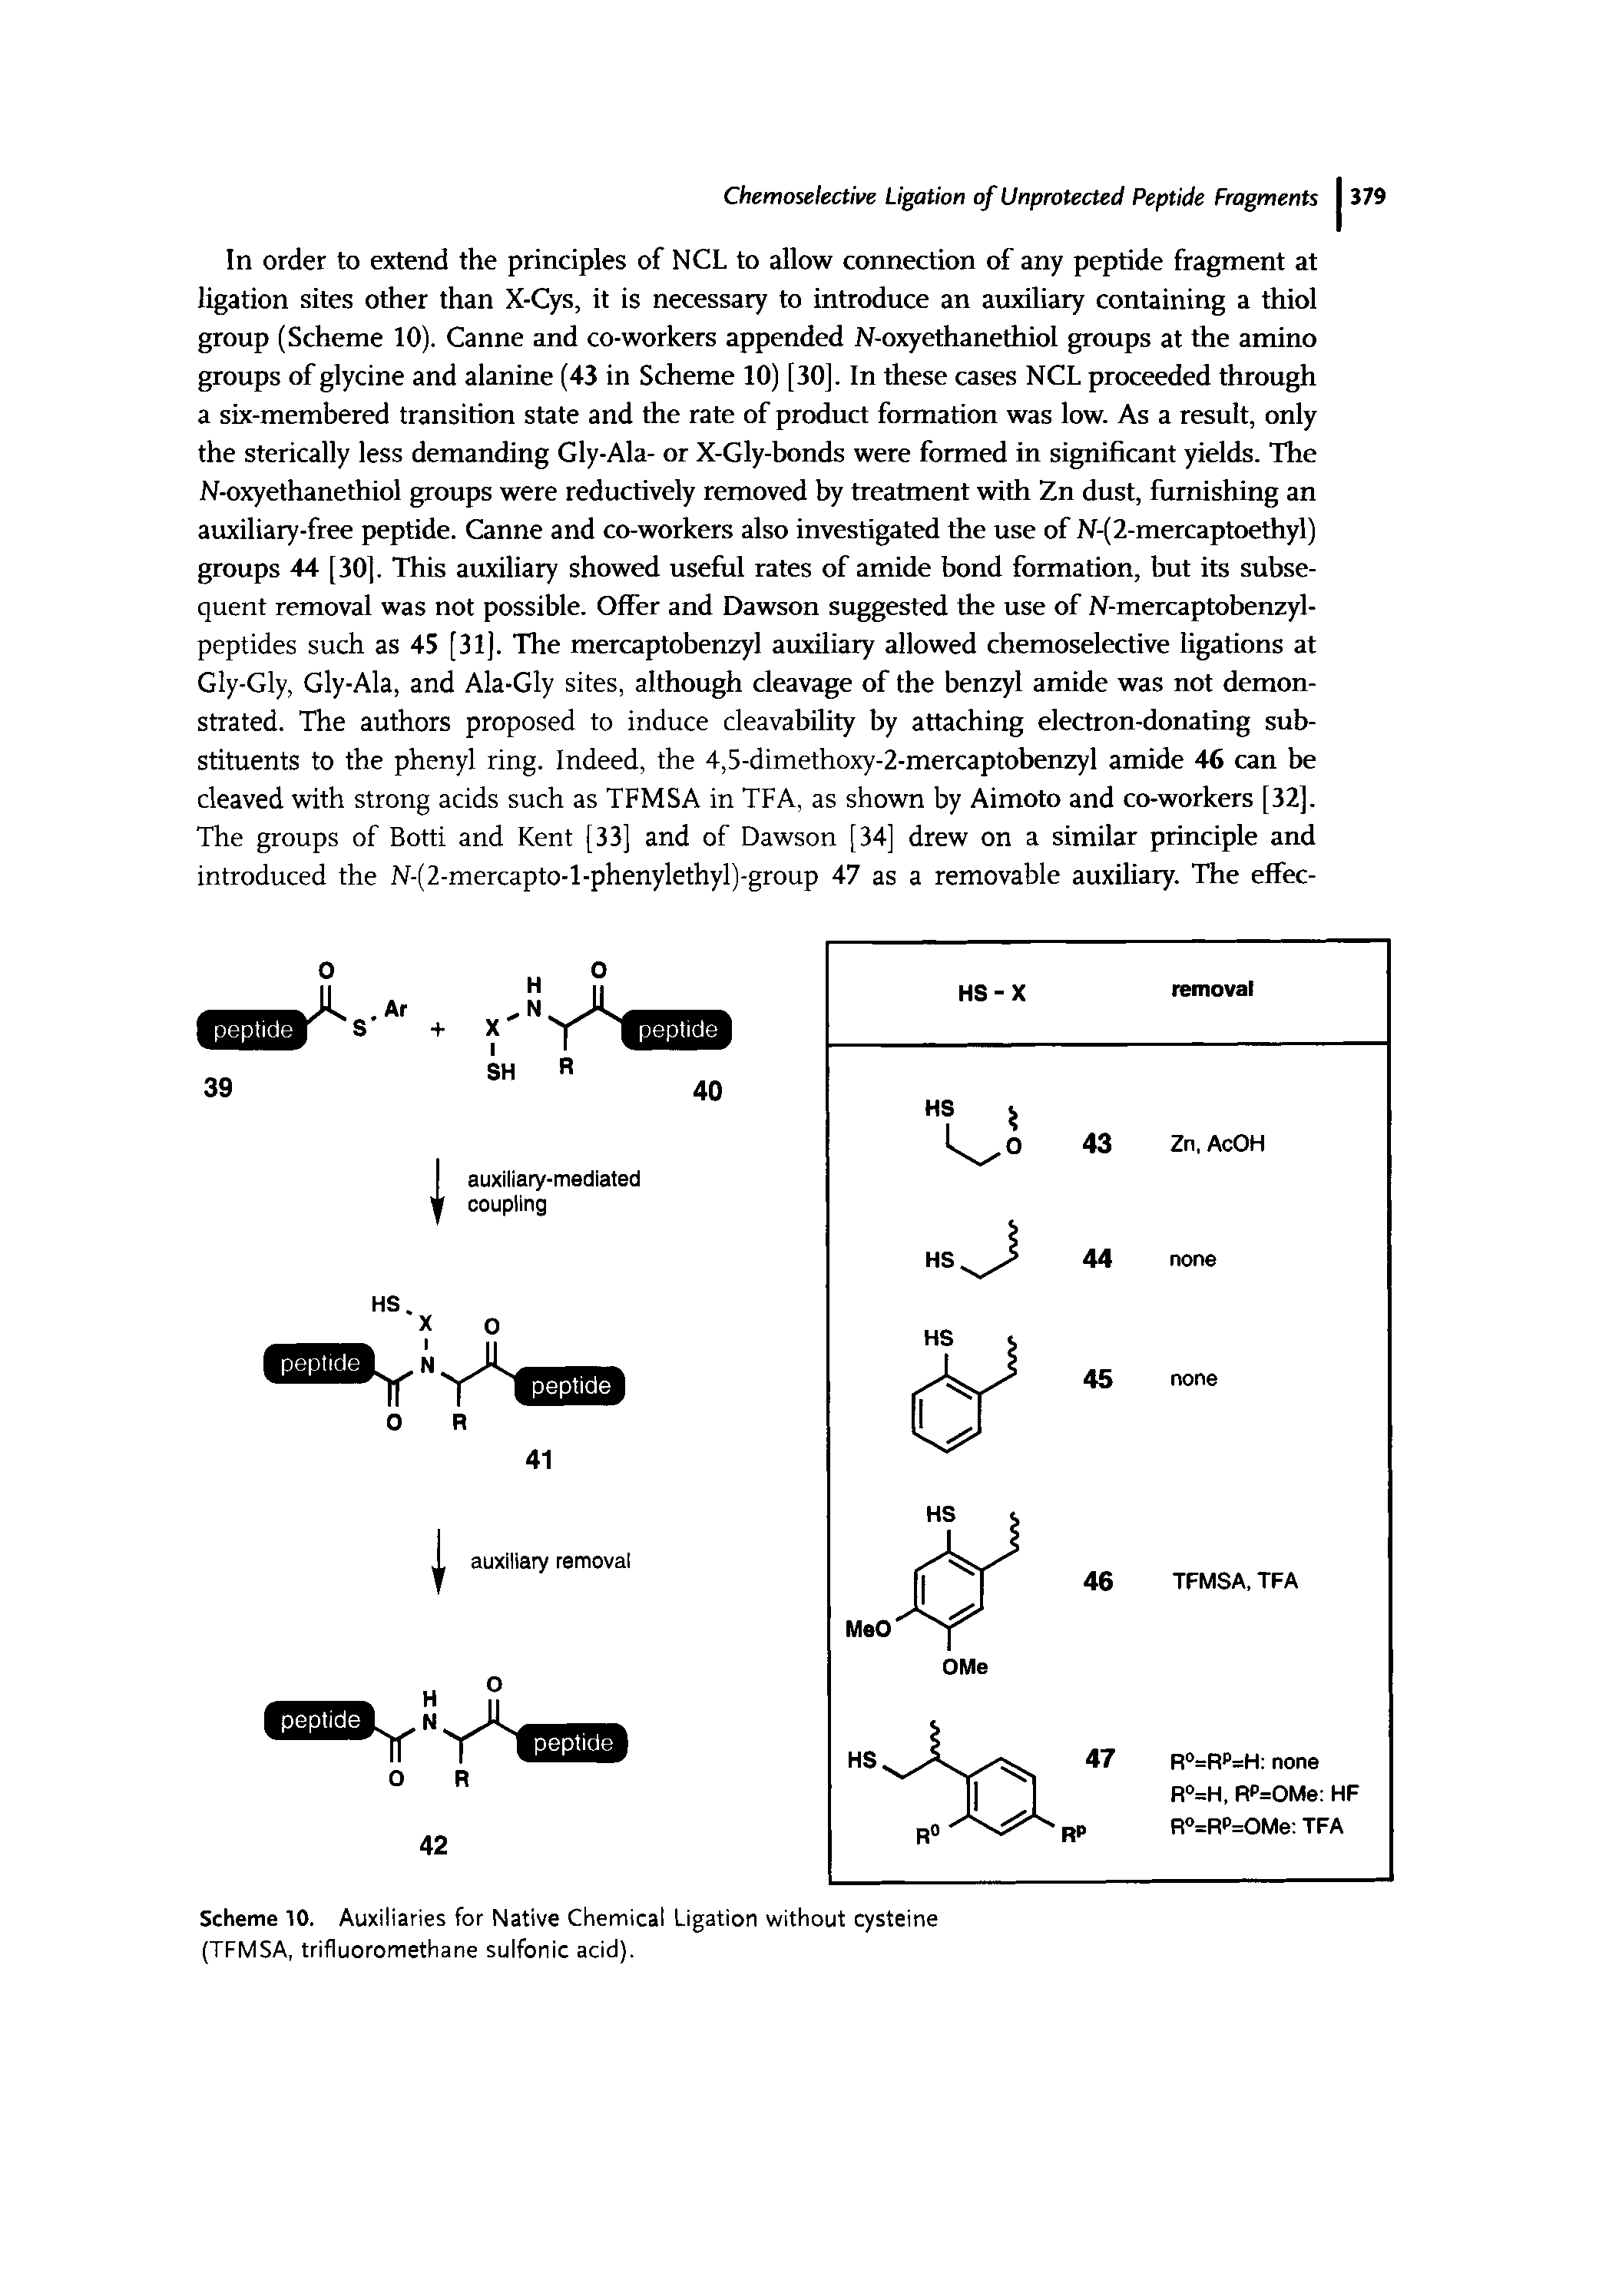 Scheme 10. Auxiliaries for Native Chemical Ligation without cysteine (TFMSA, trifluoromethane sulfonic acid).